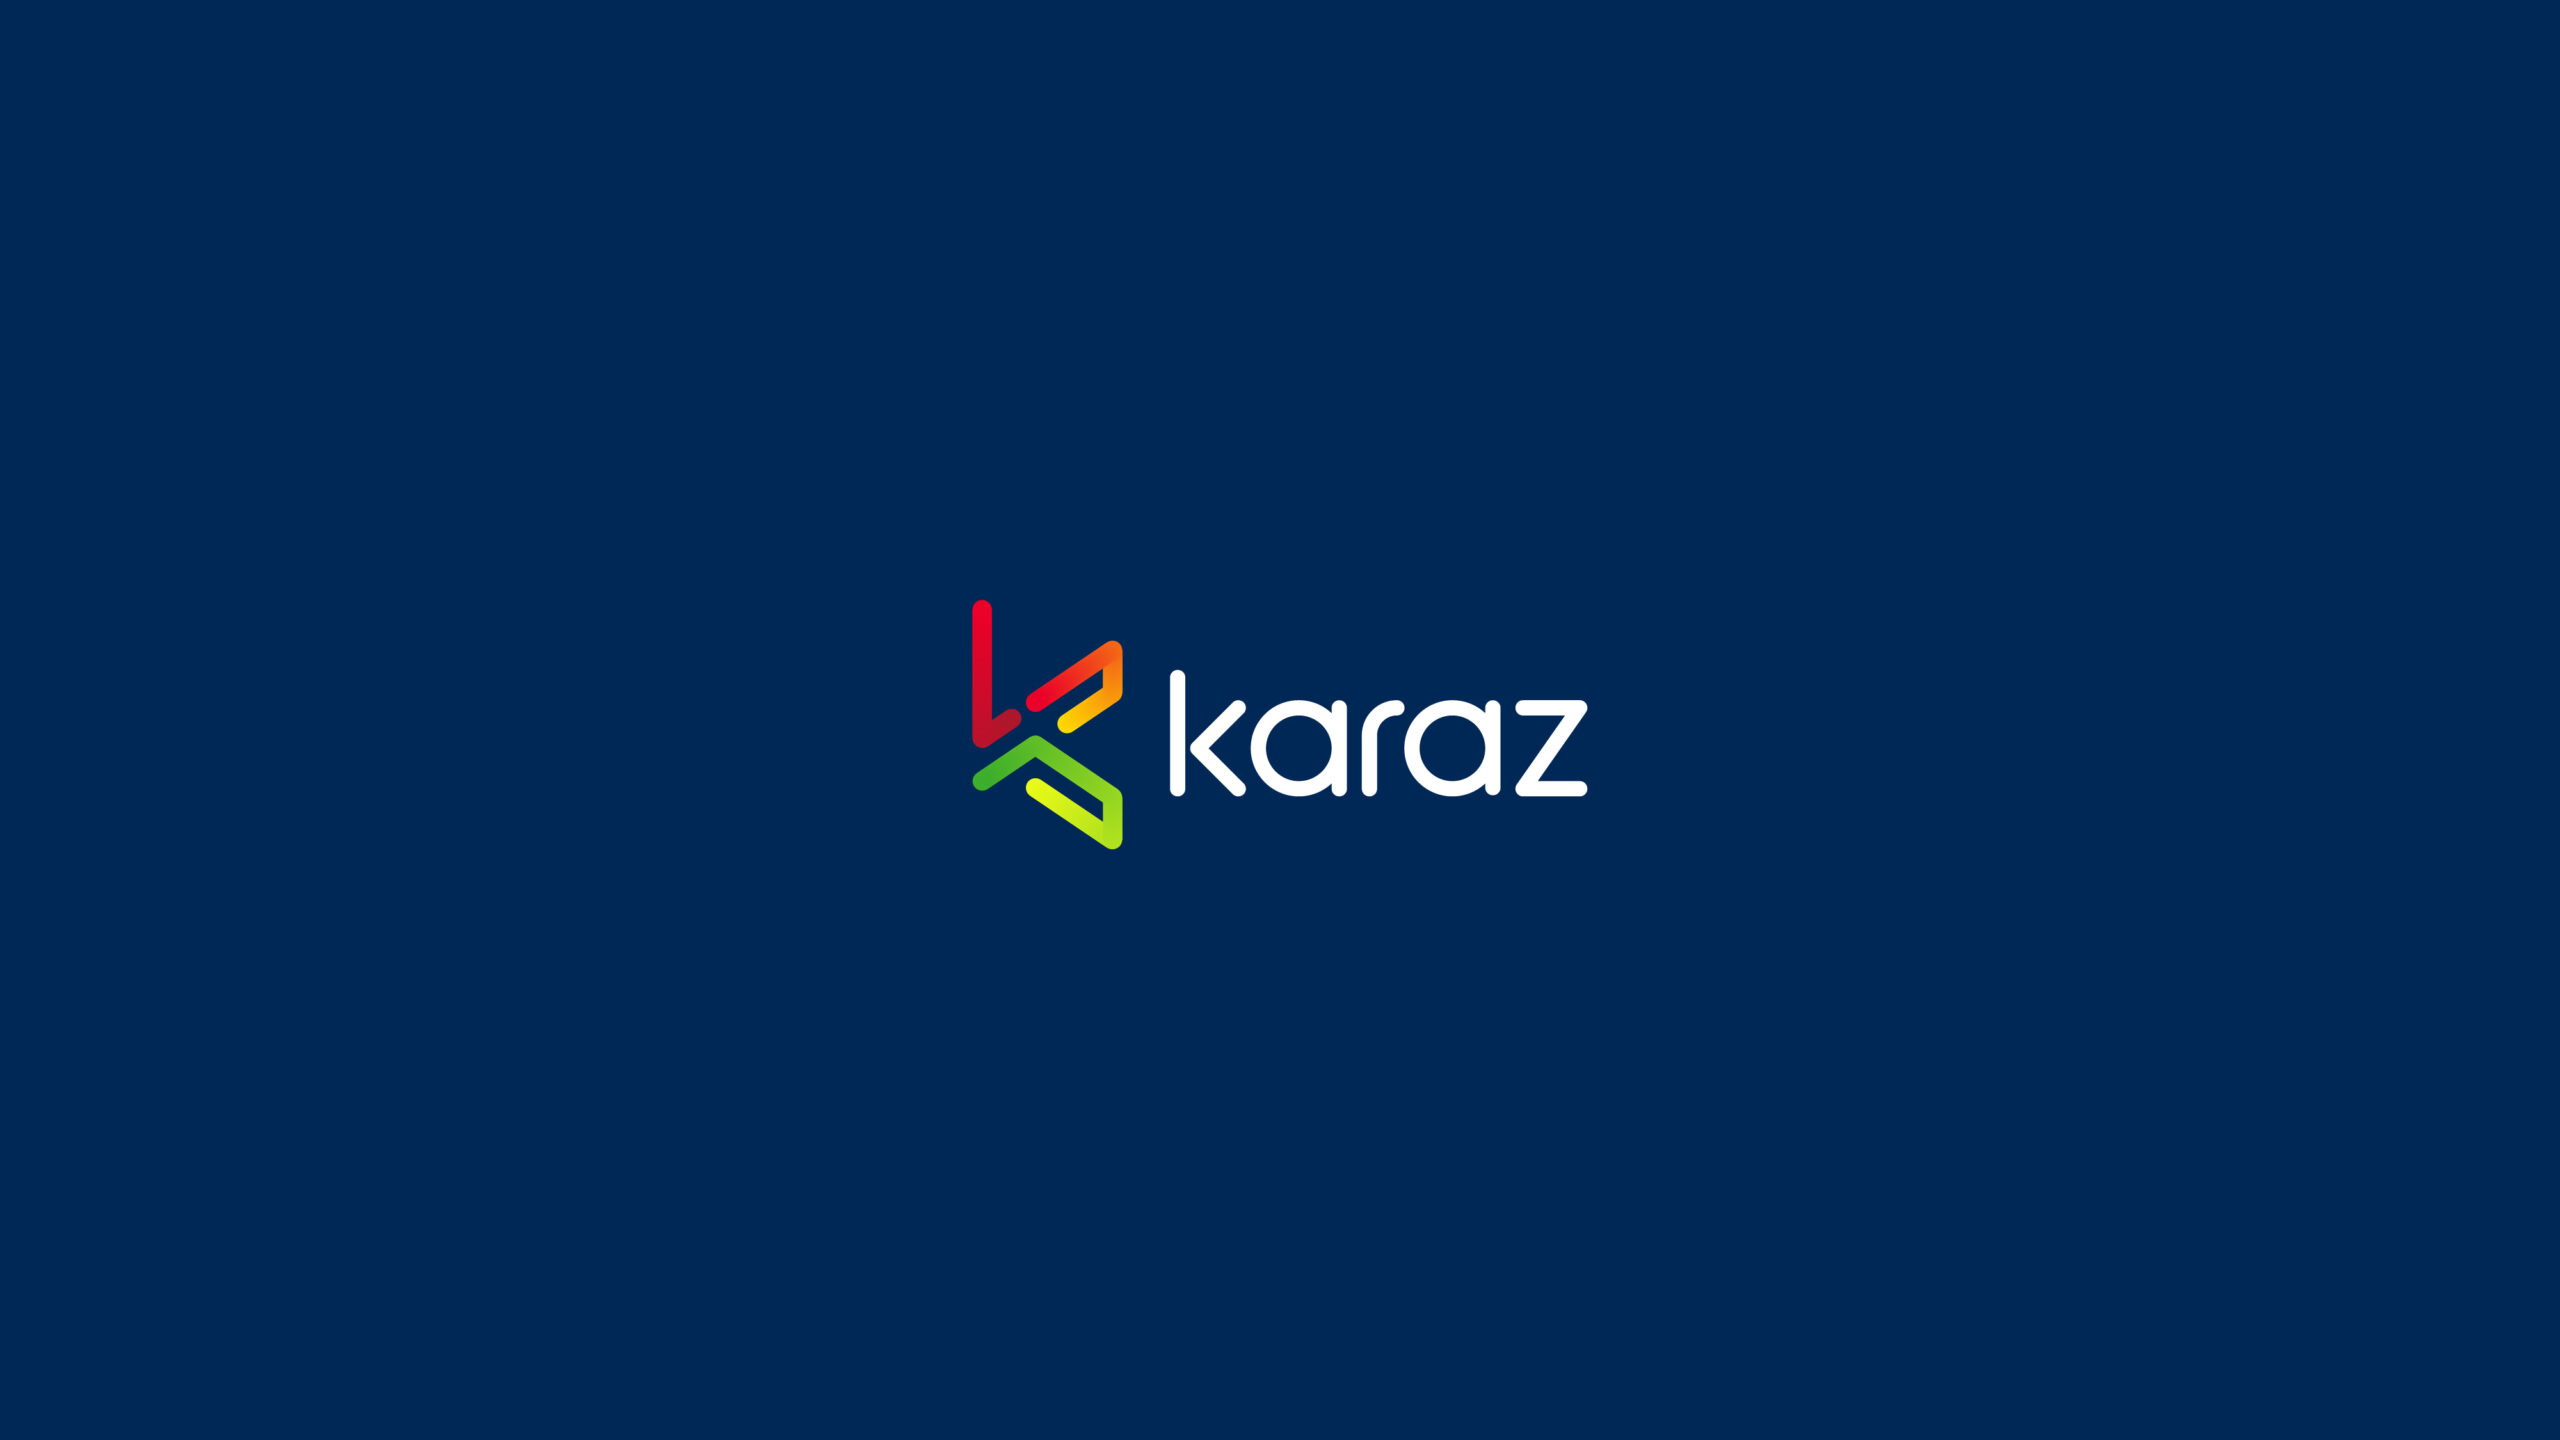 Karaz-Branding-By-Millimeter-Creative-Agency-02